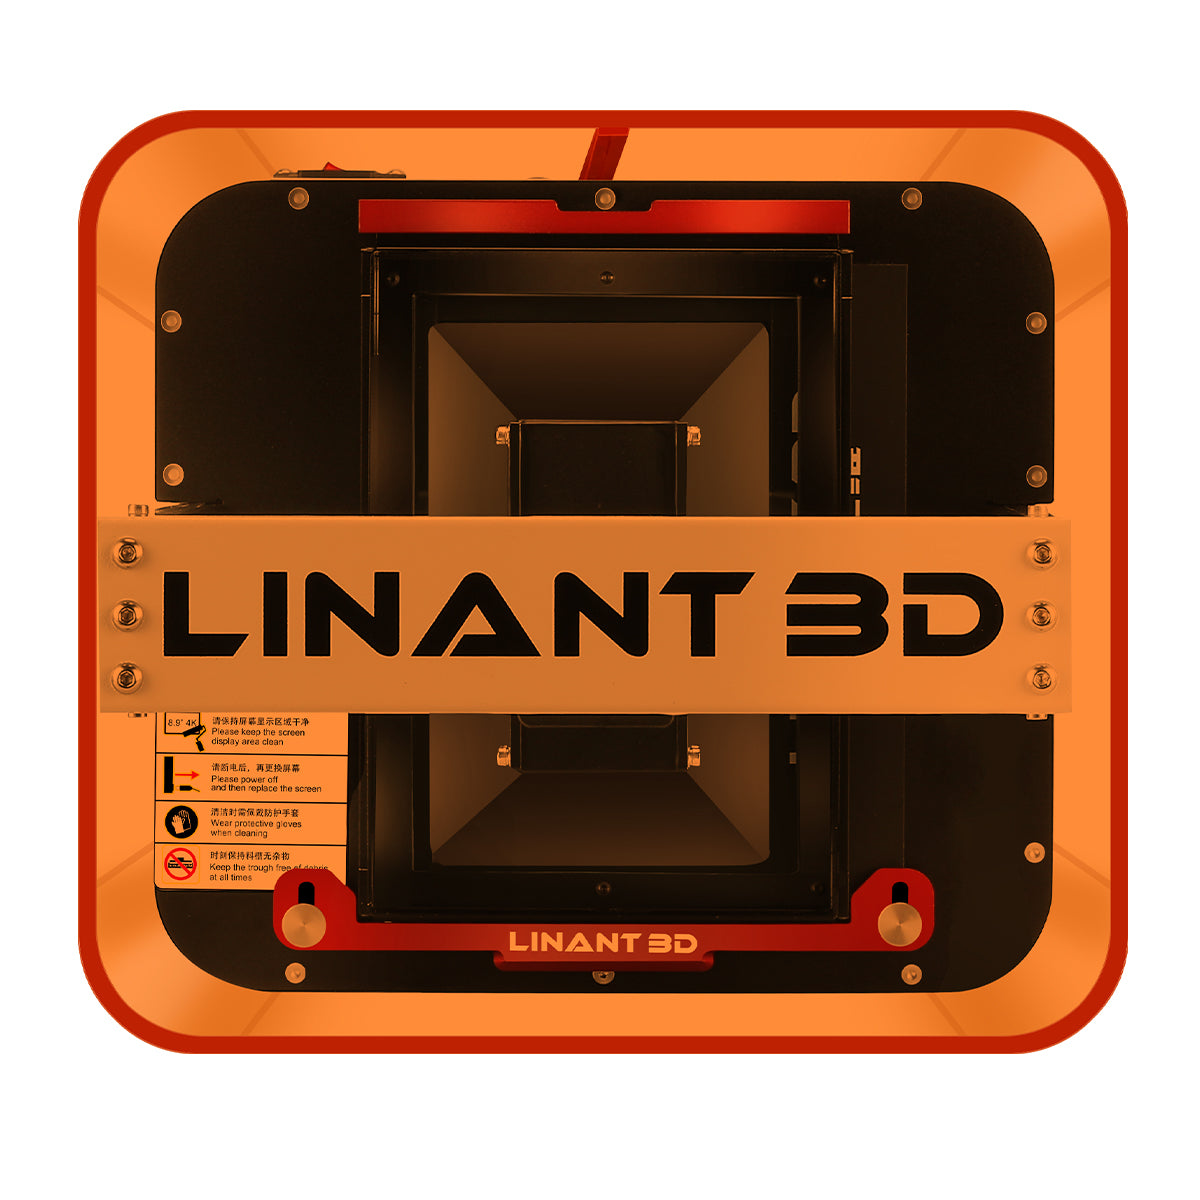 LINANT 3D BASE 8.9&